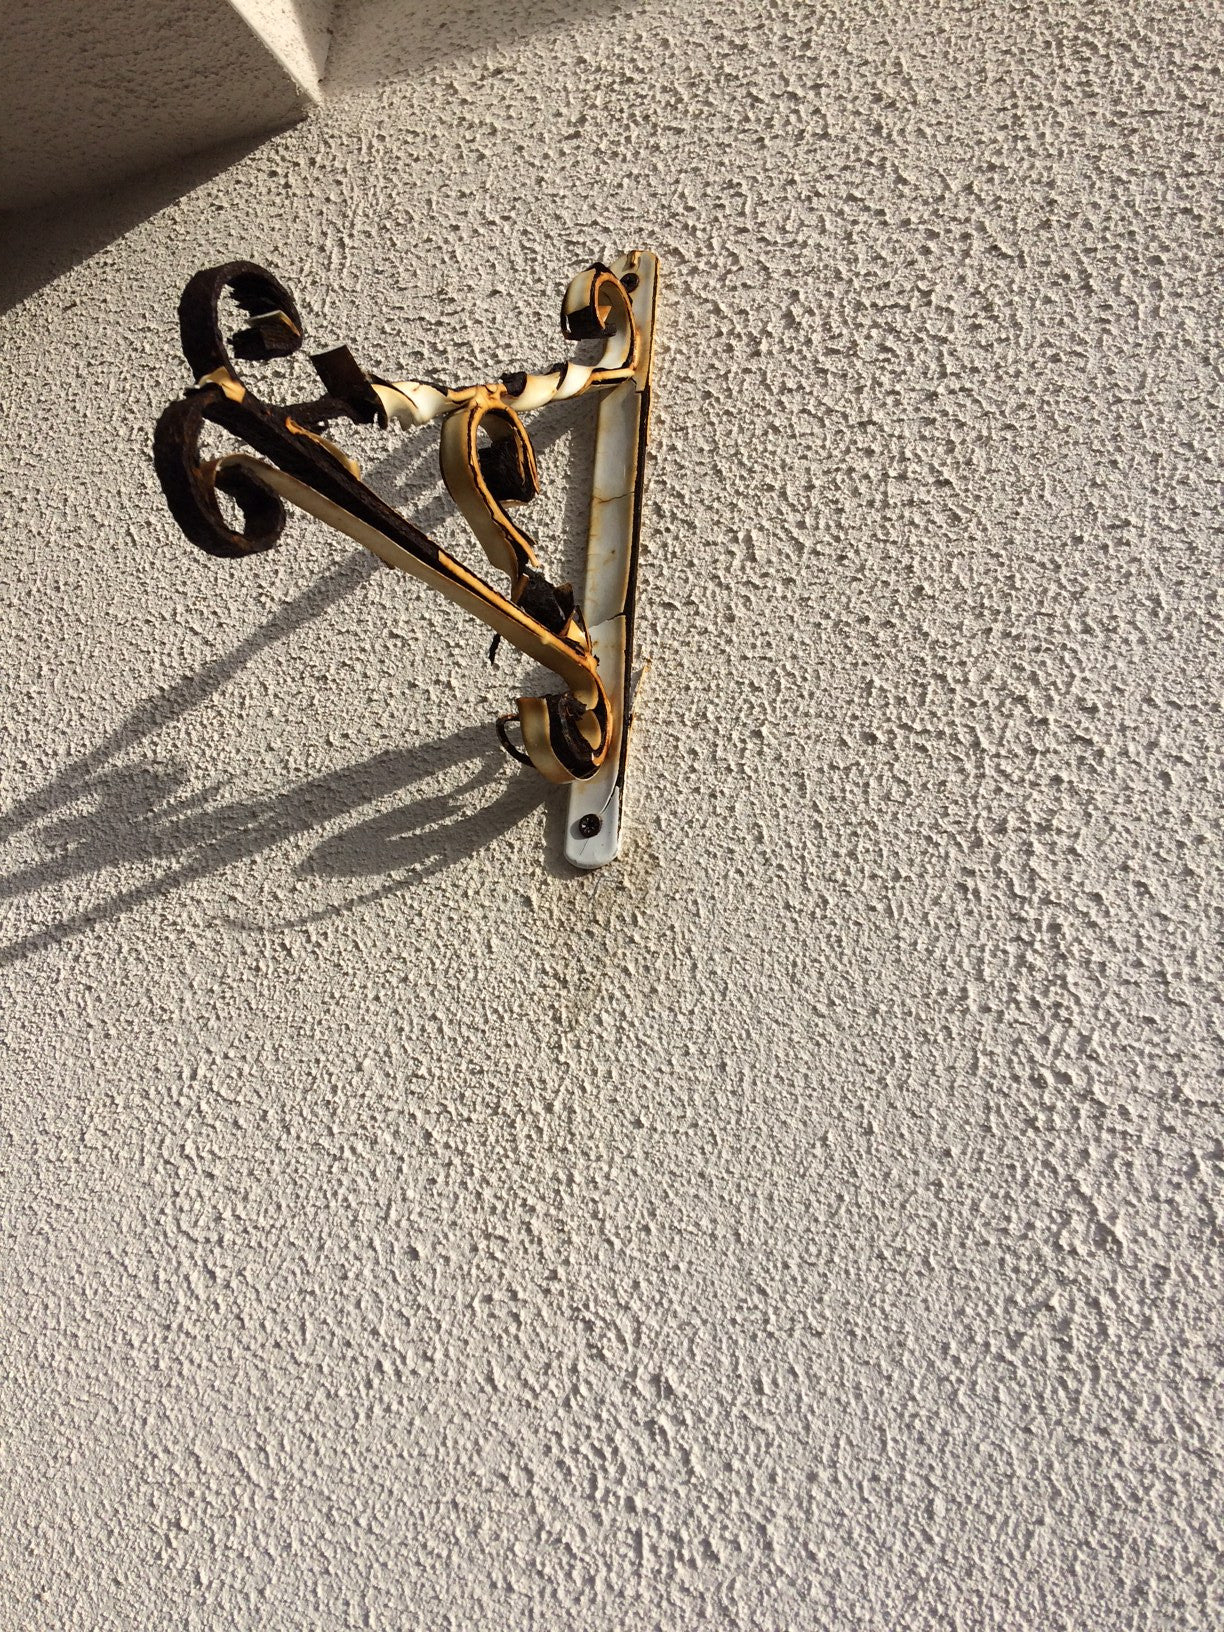 Clean rust from render caused by hanging basket bracket